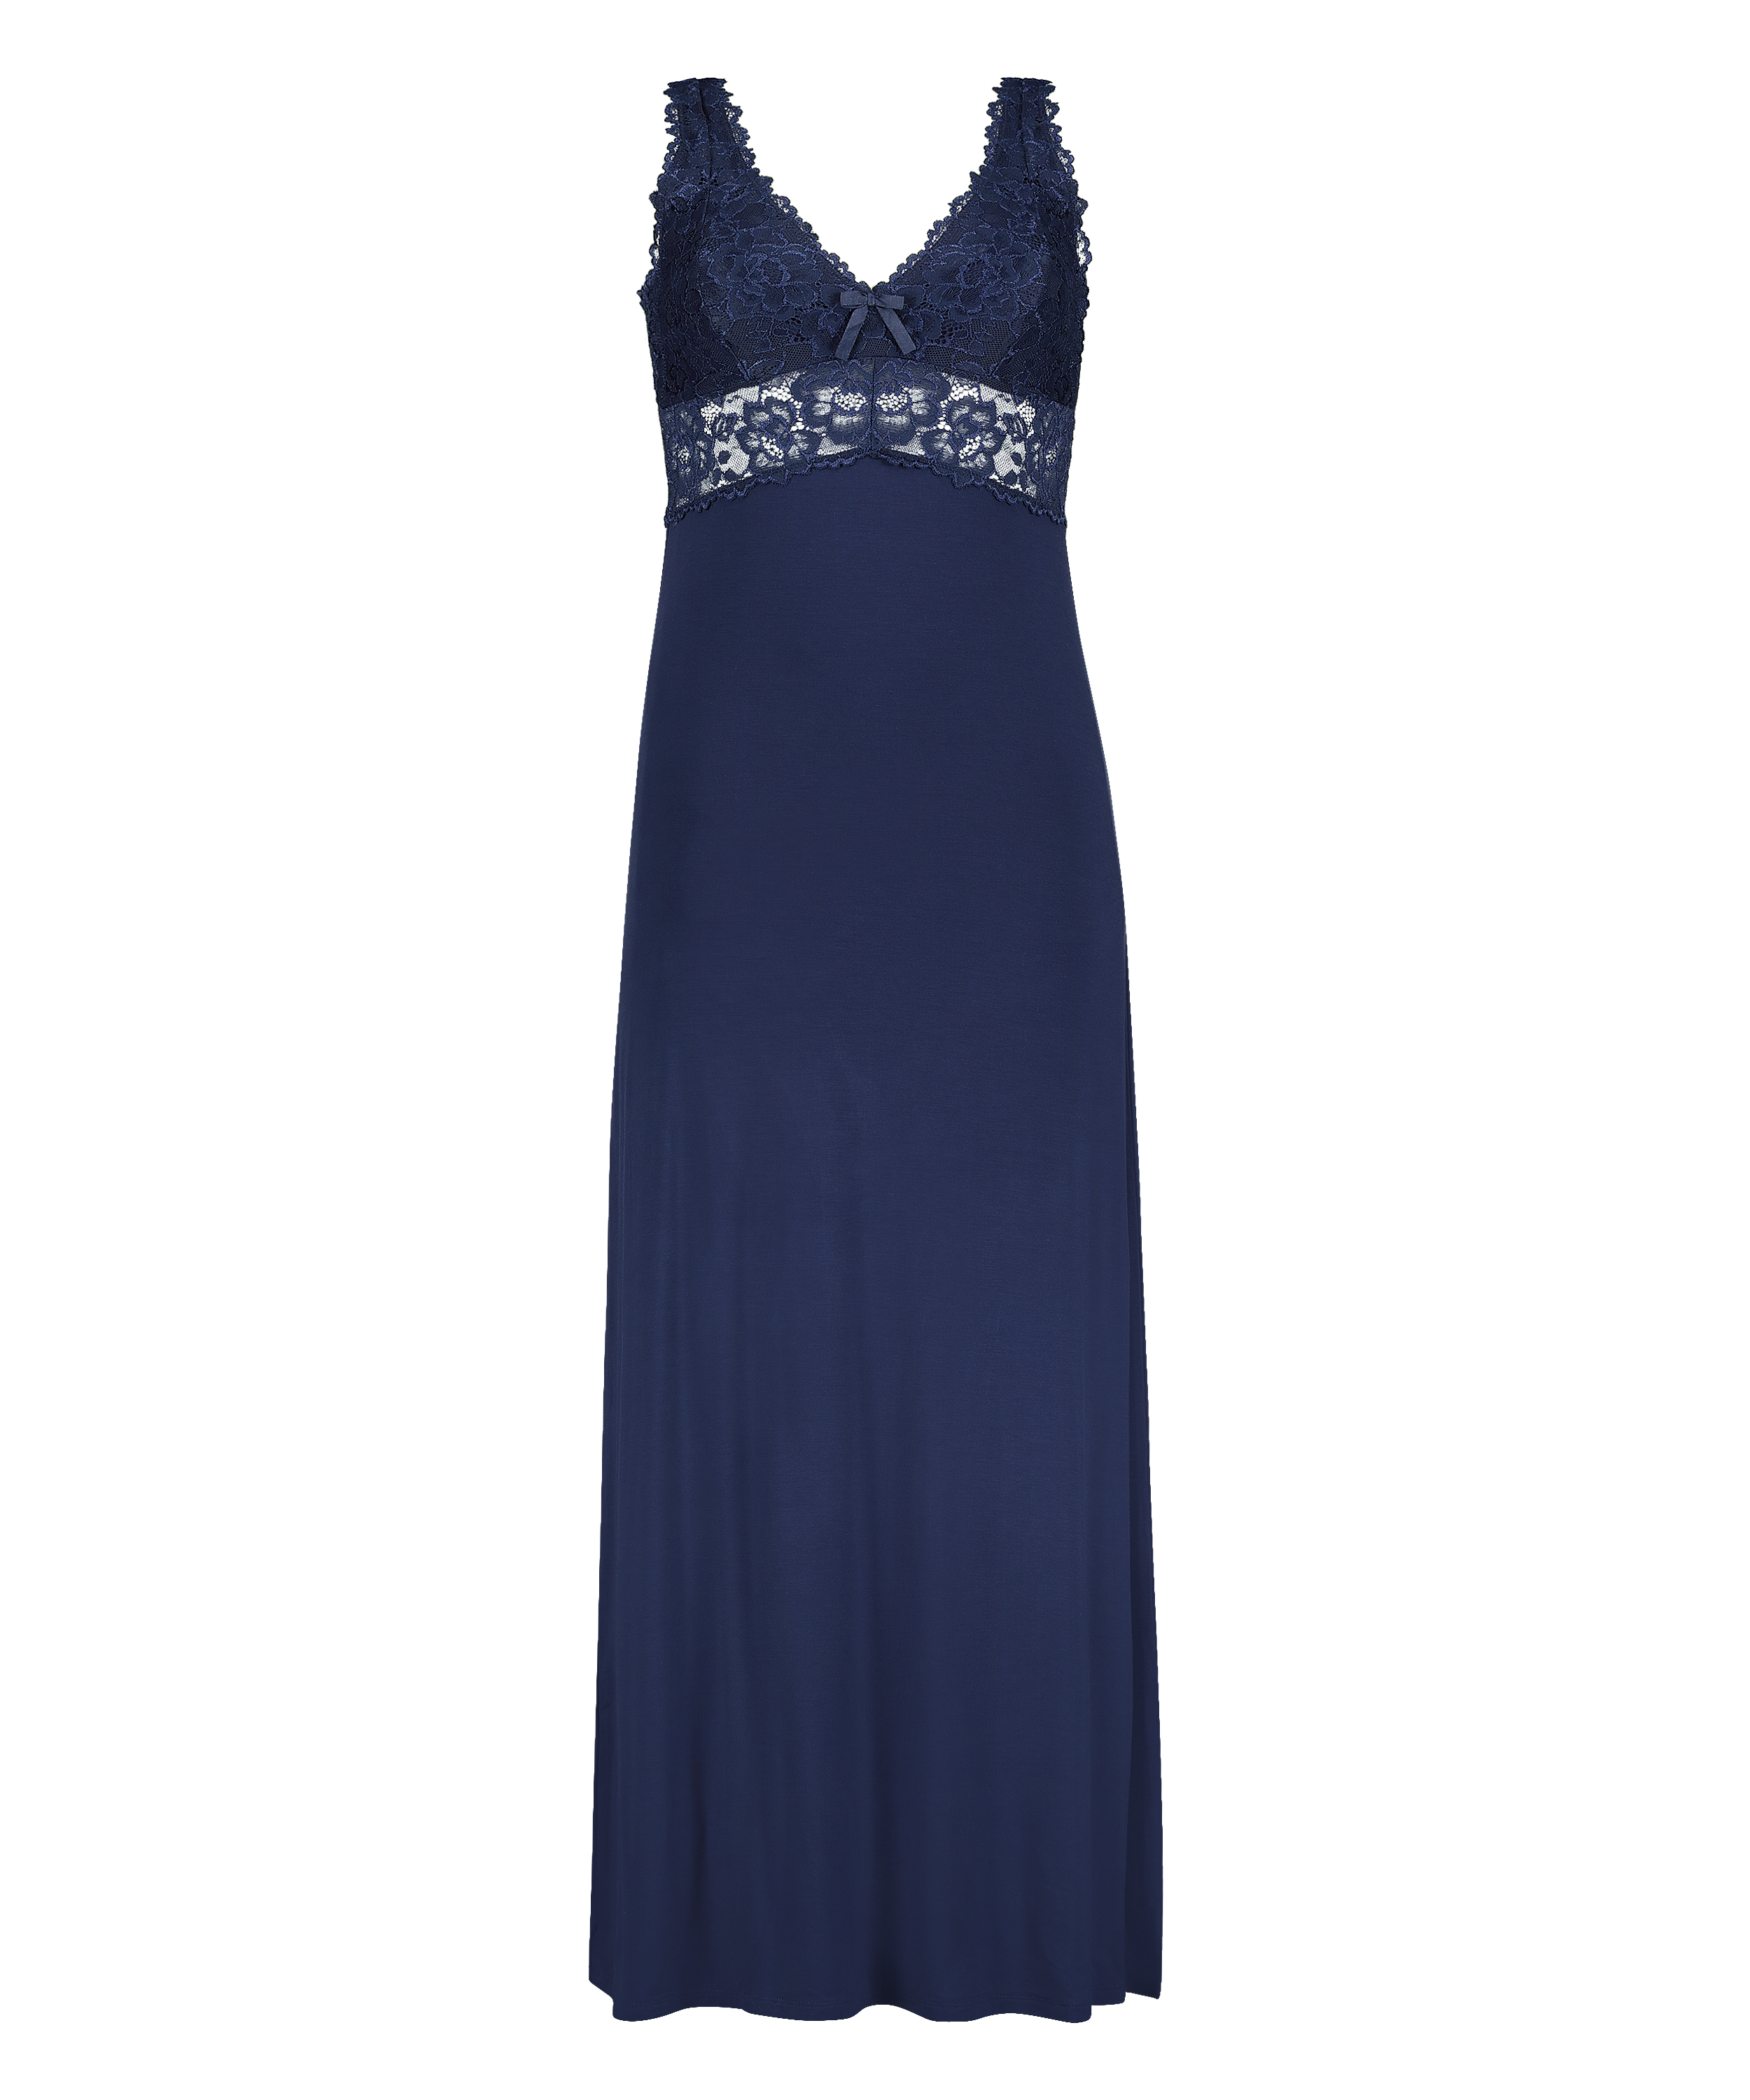 Nora Lace Long Slip Dress, Blue, main